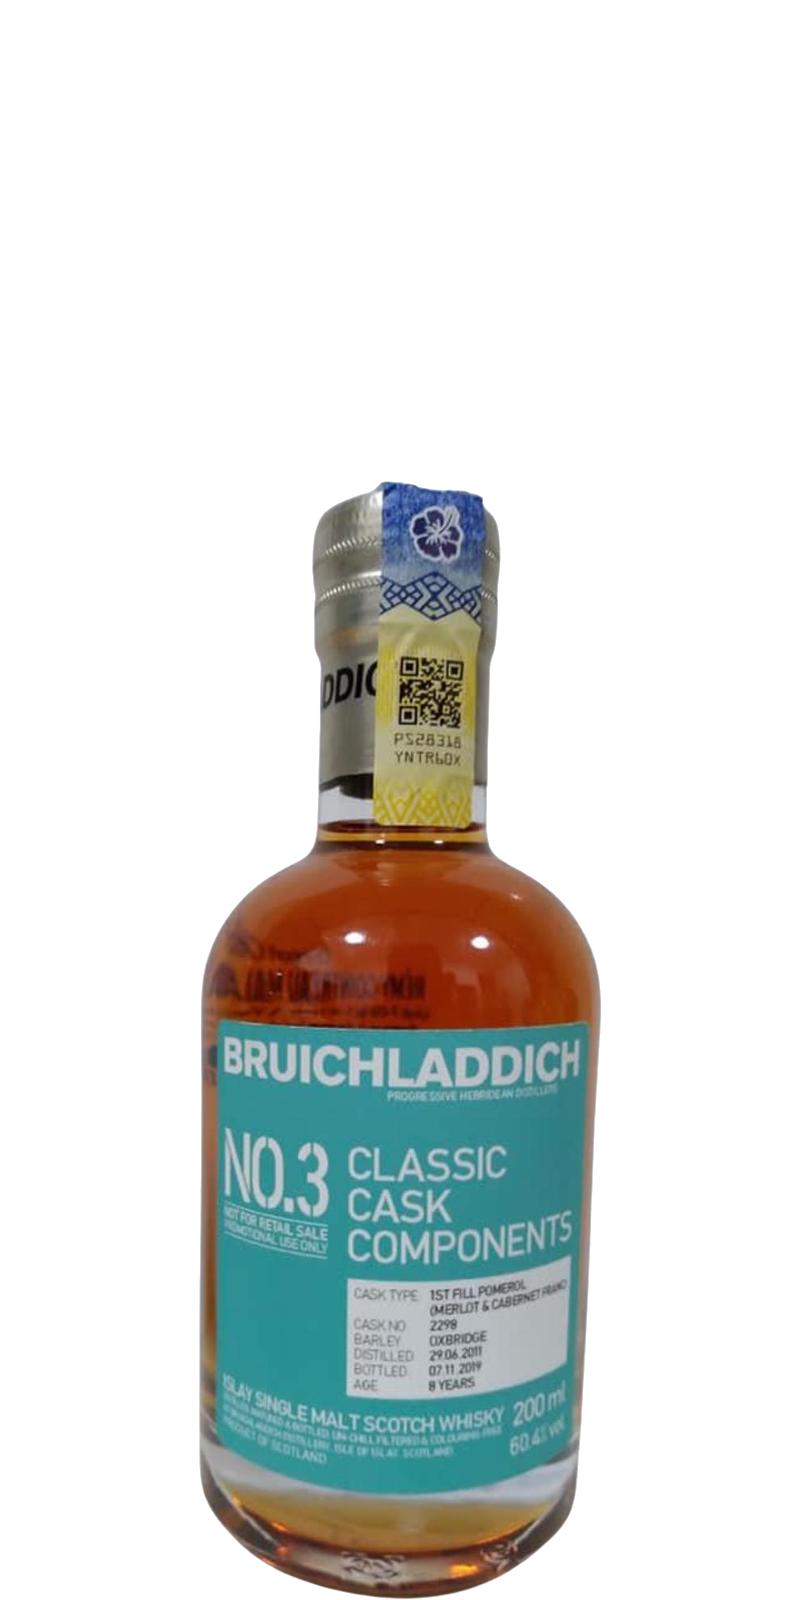 Bruichladdich 2011 Classic Cask Components No. 3 1st Filled Pomerol Merlot Cabetner Franc 2298 60.4% 200ml